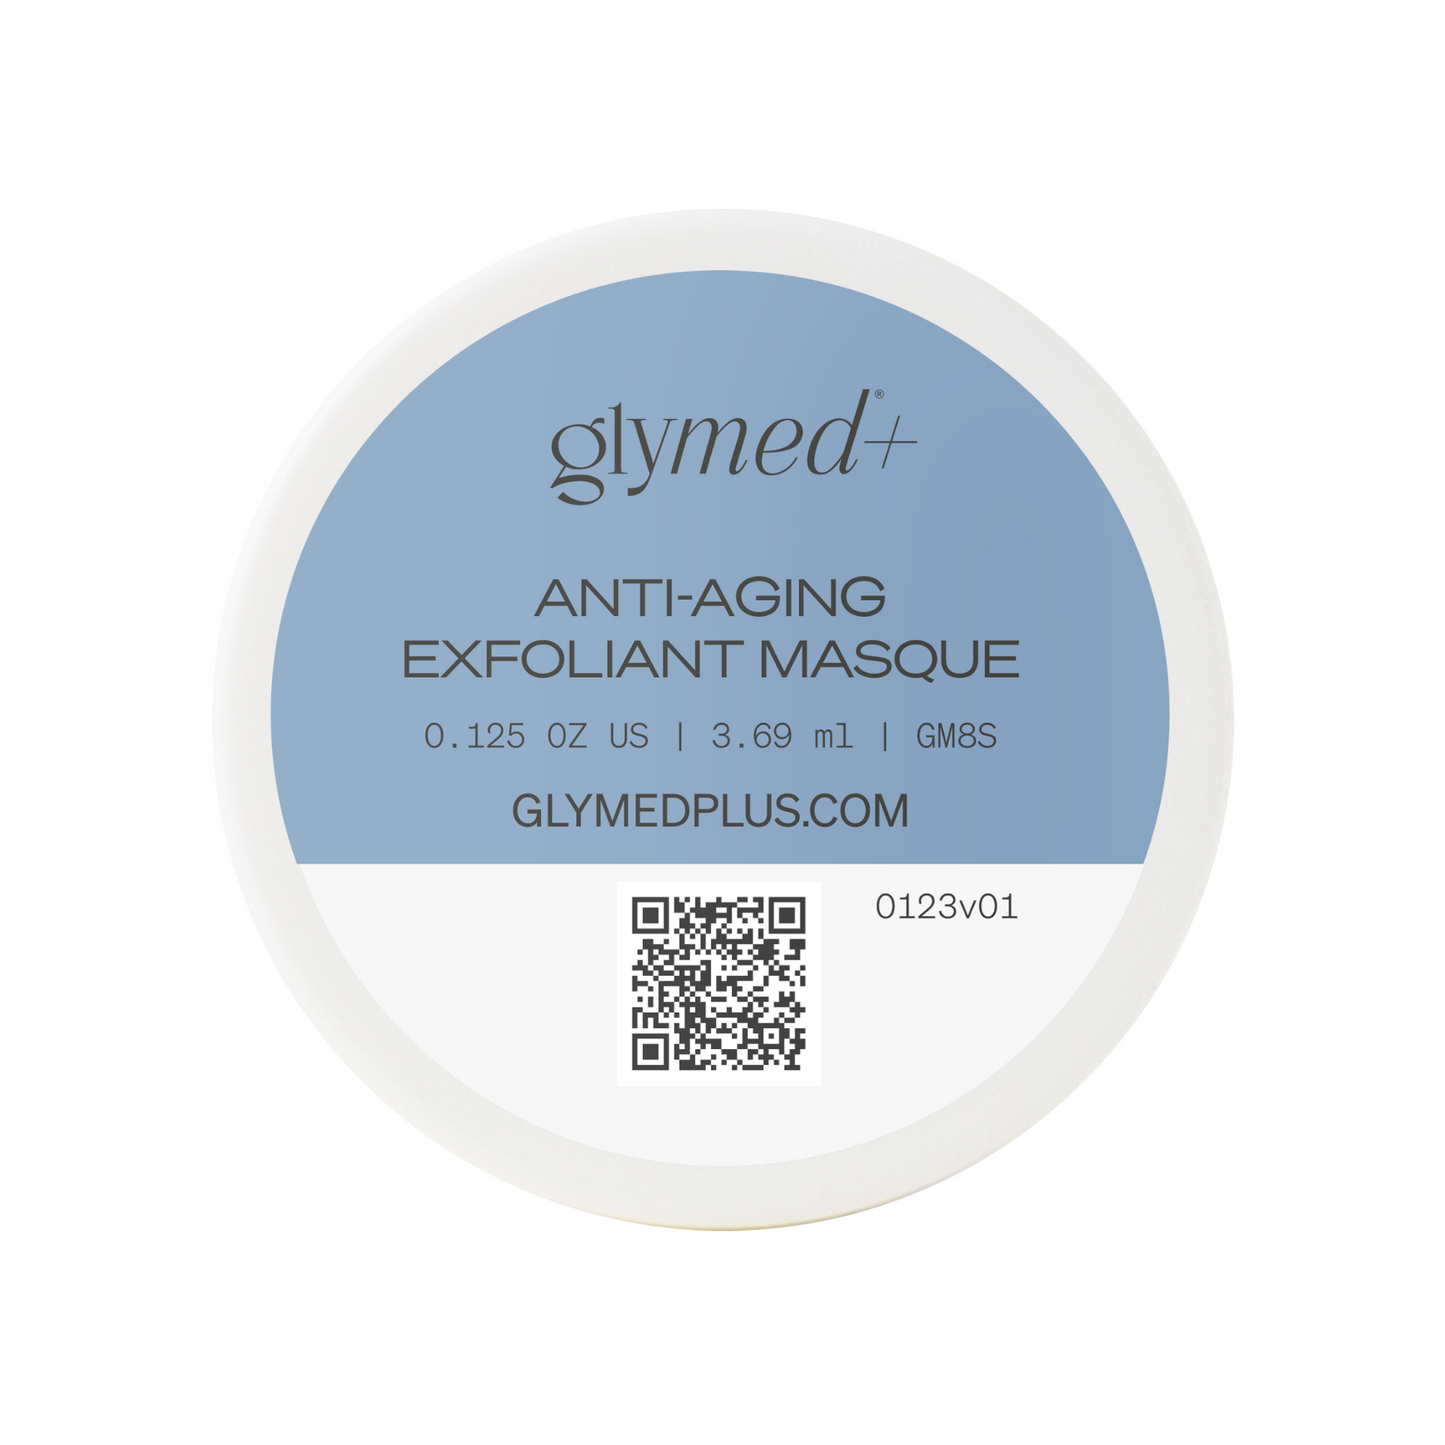 Anti-Aging Exfoliant Masque | Glymed Plus